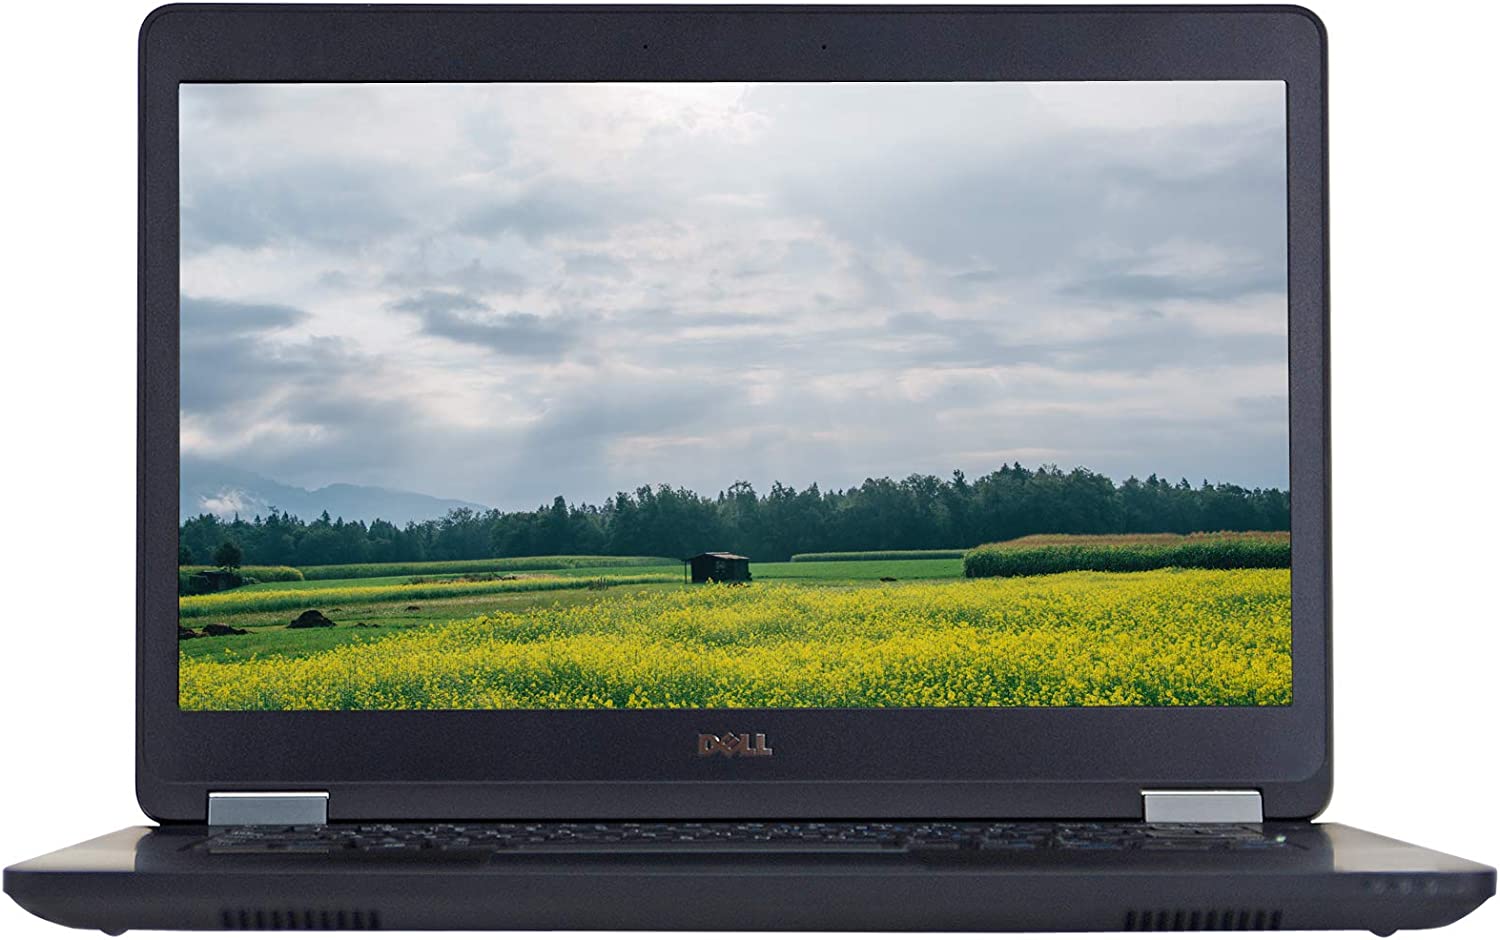 Dell Latitude E5470 Laptop i7-6600U/2.60 GHz Full HD Touch Screen 14 inch Display, Windows 10 Pro (Renewed)